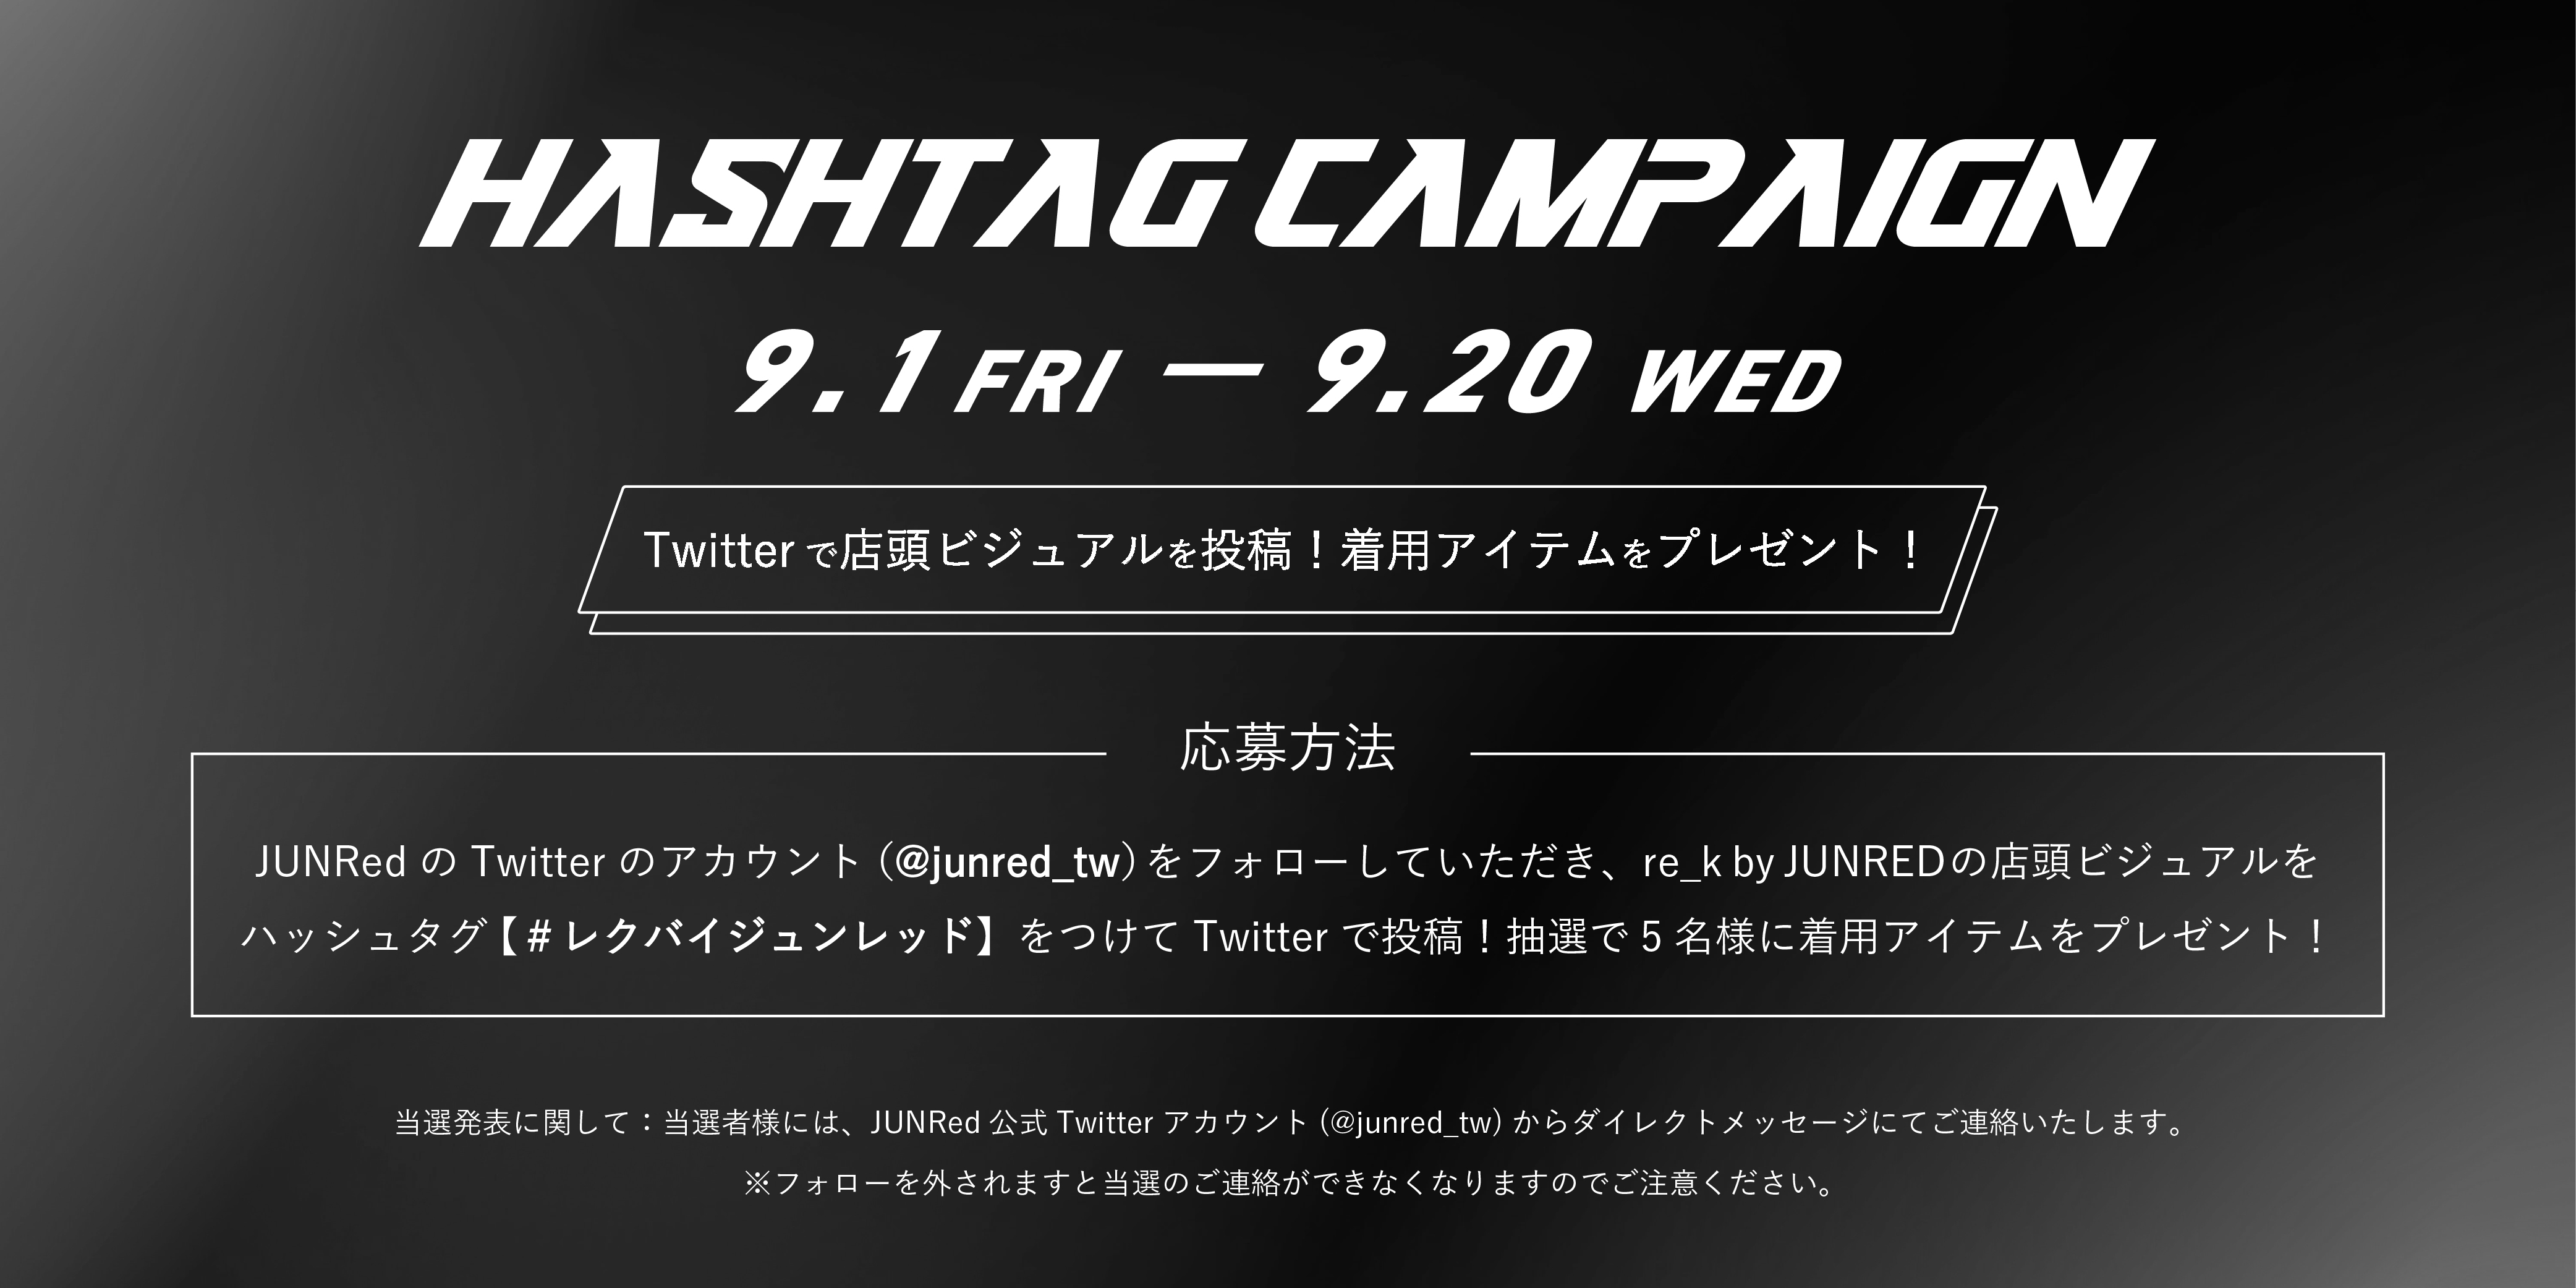 Hashtag Campaign